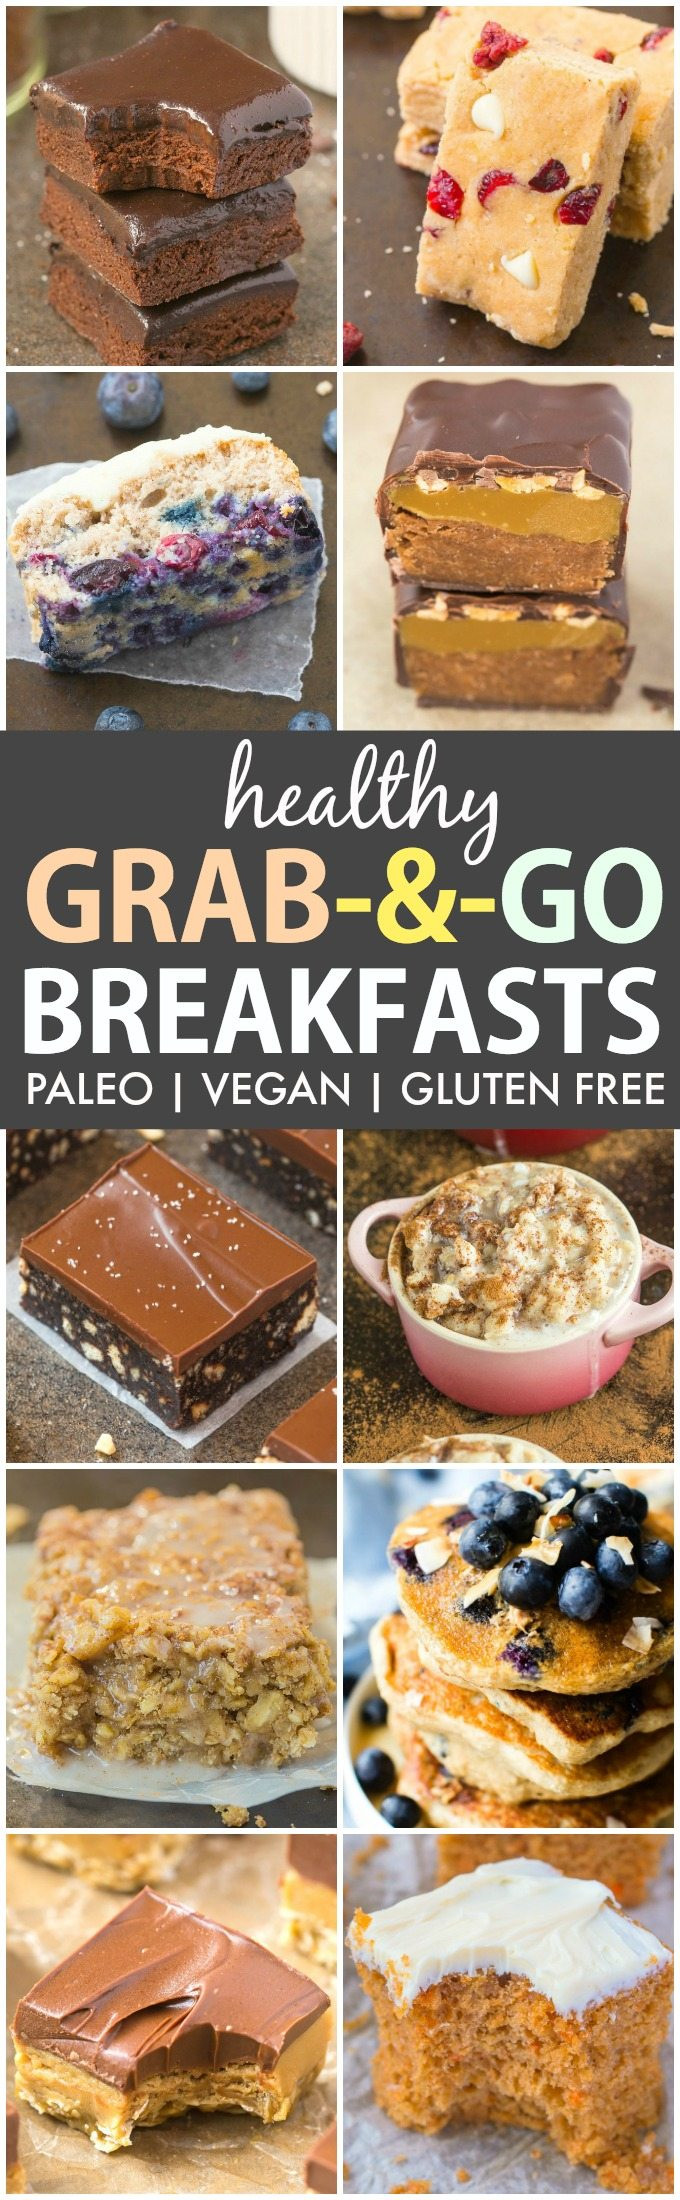 Vegan Paleo Breakfast Recipes
 25 Easy and Healthy Grab and Go Breakfast Ideas Paleo